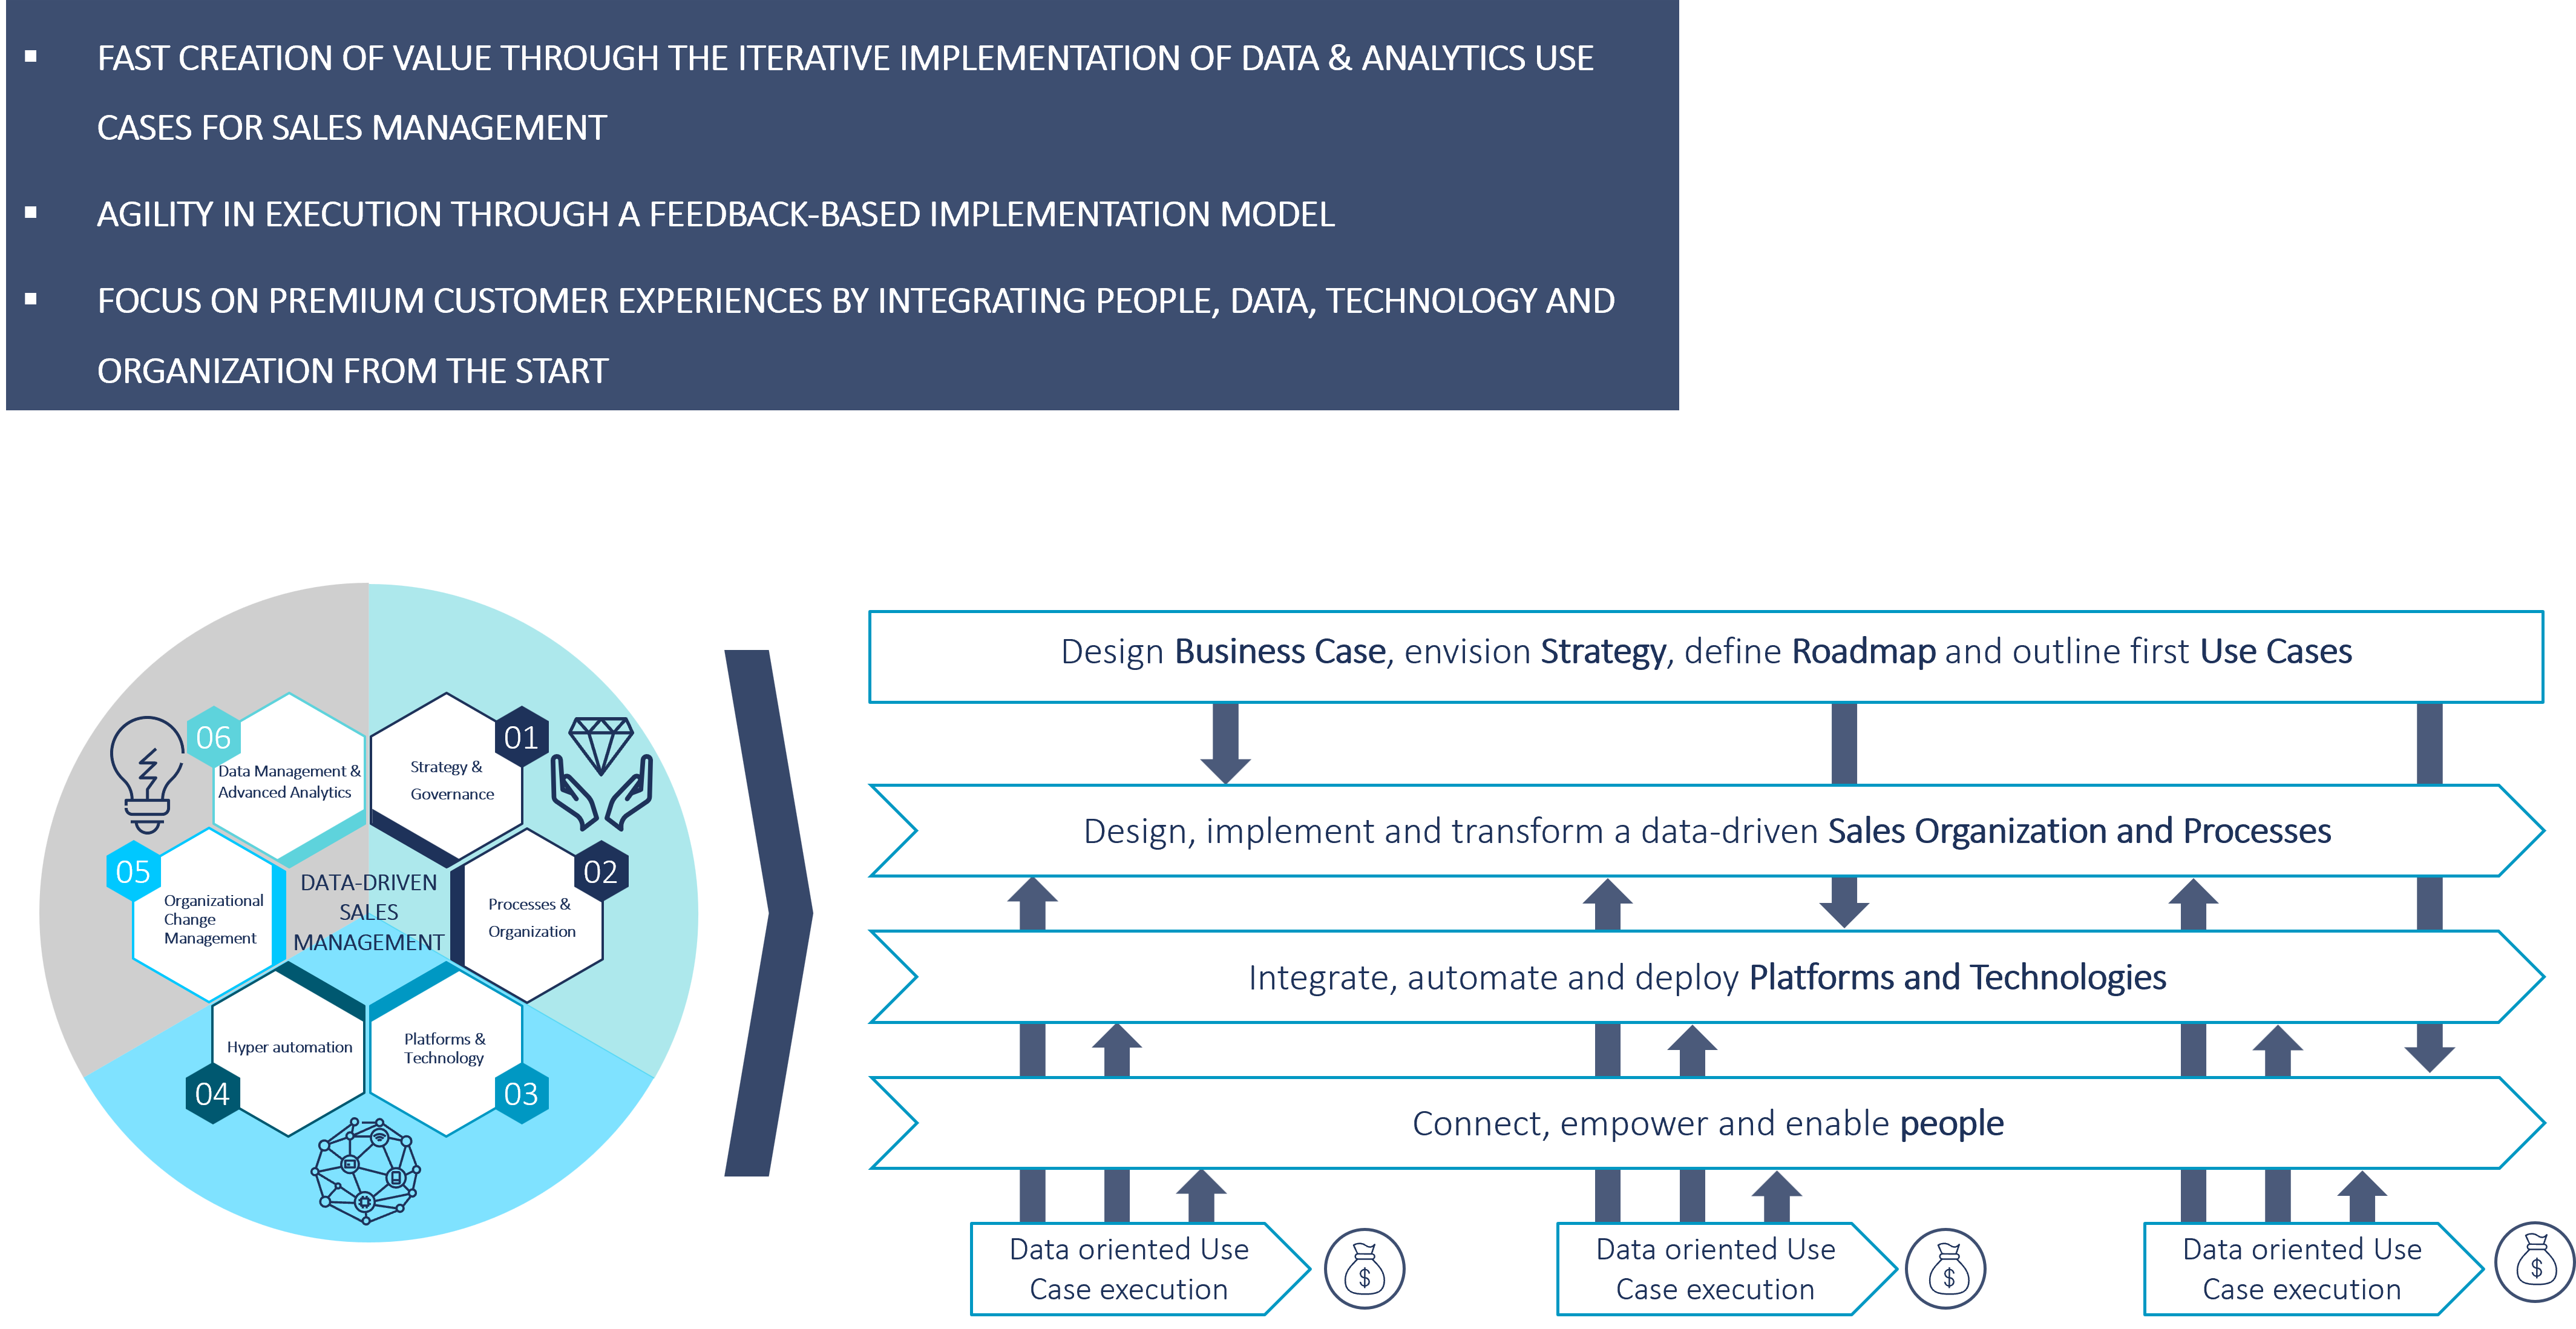 Figure 1: Data Driven Sales Management Framework